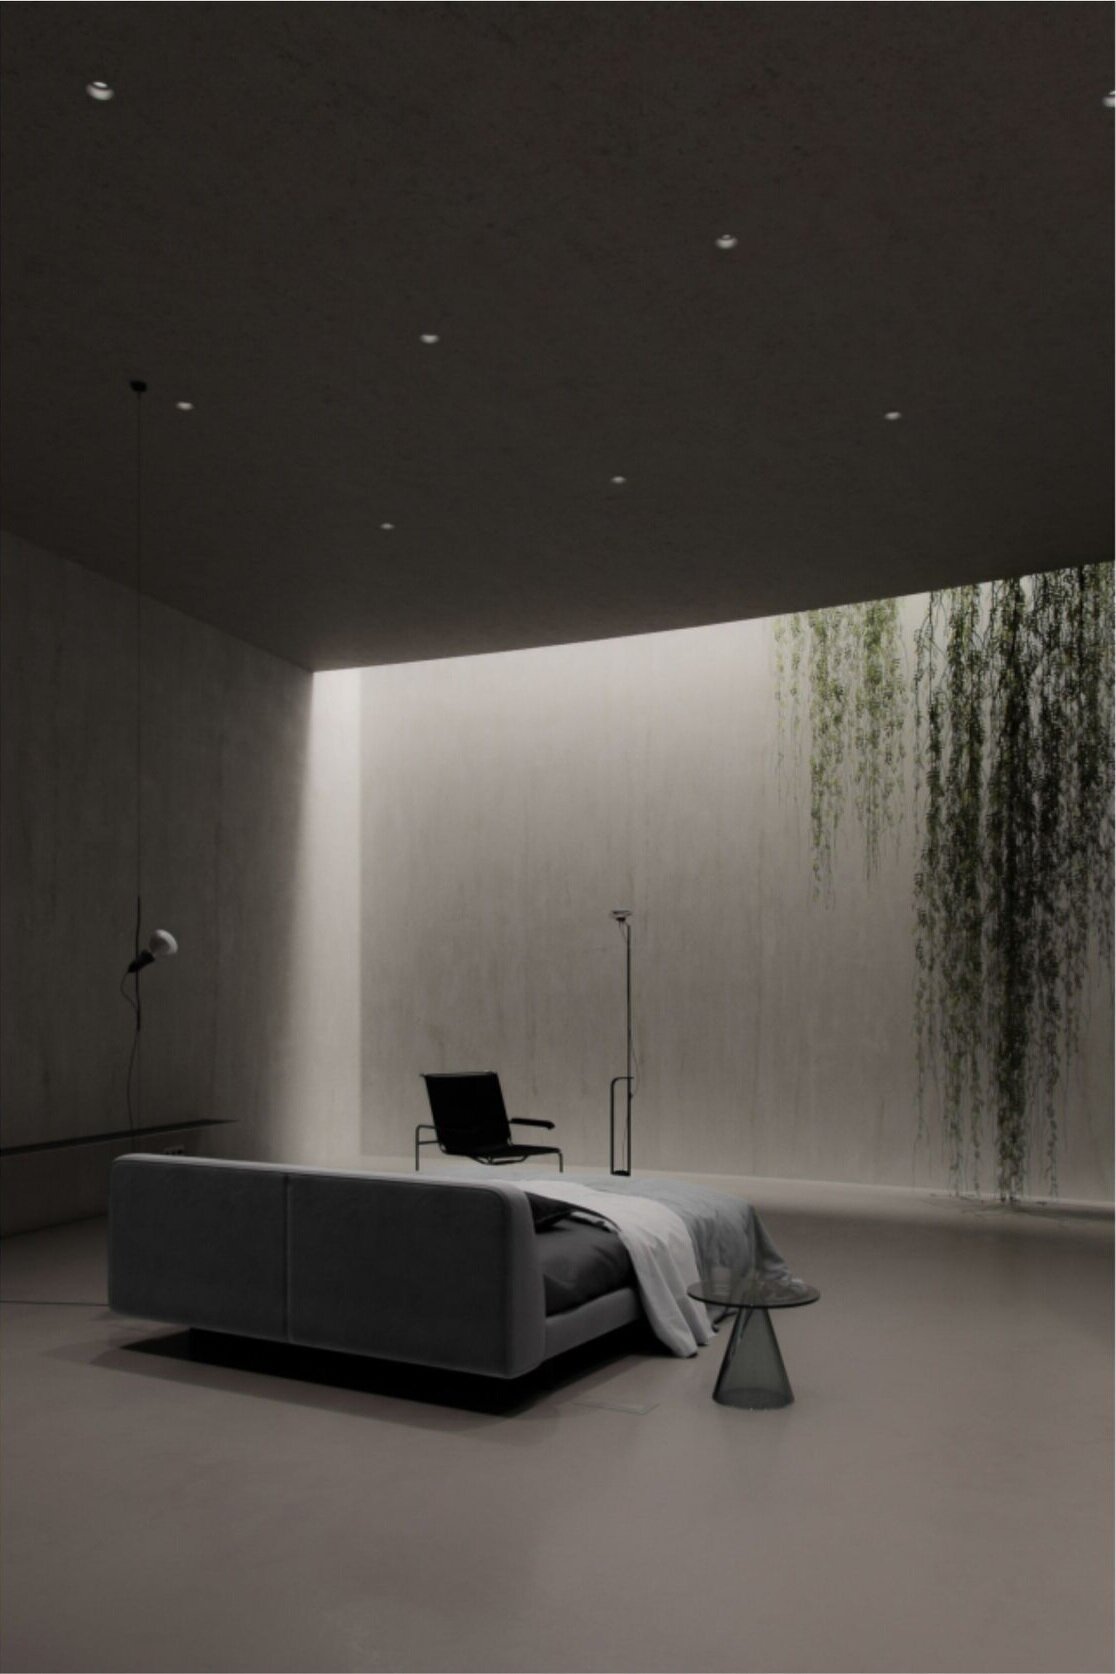 Sergey-Makhno-Architects-Visual-Atelier-8-Plan-B-980.jpg